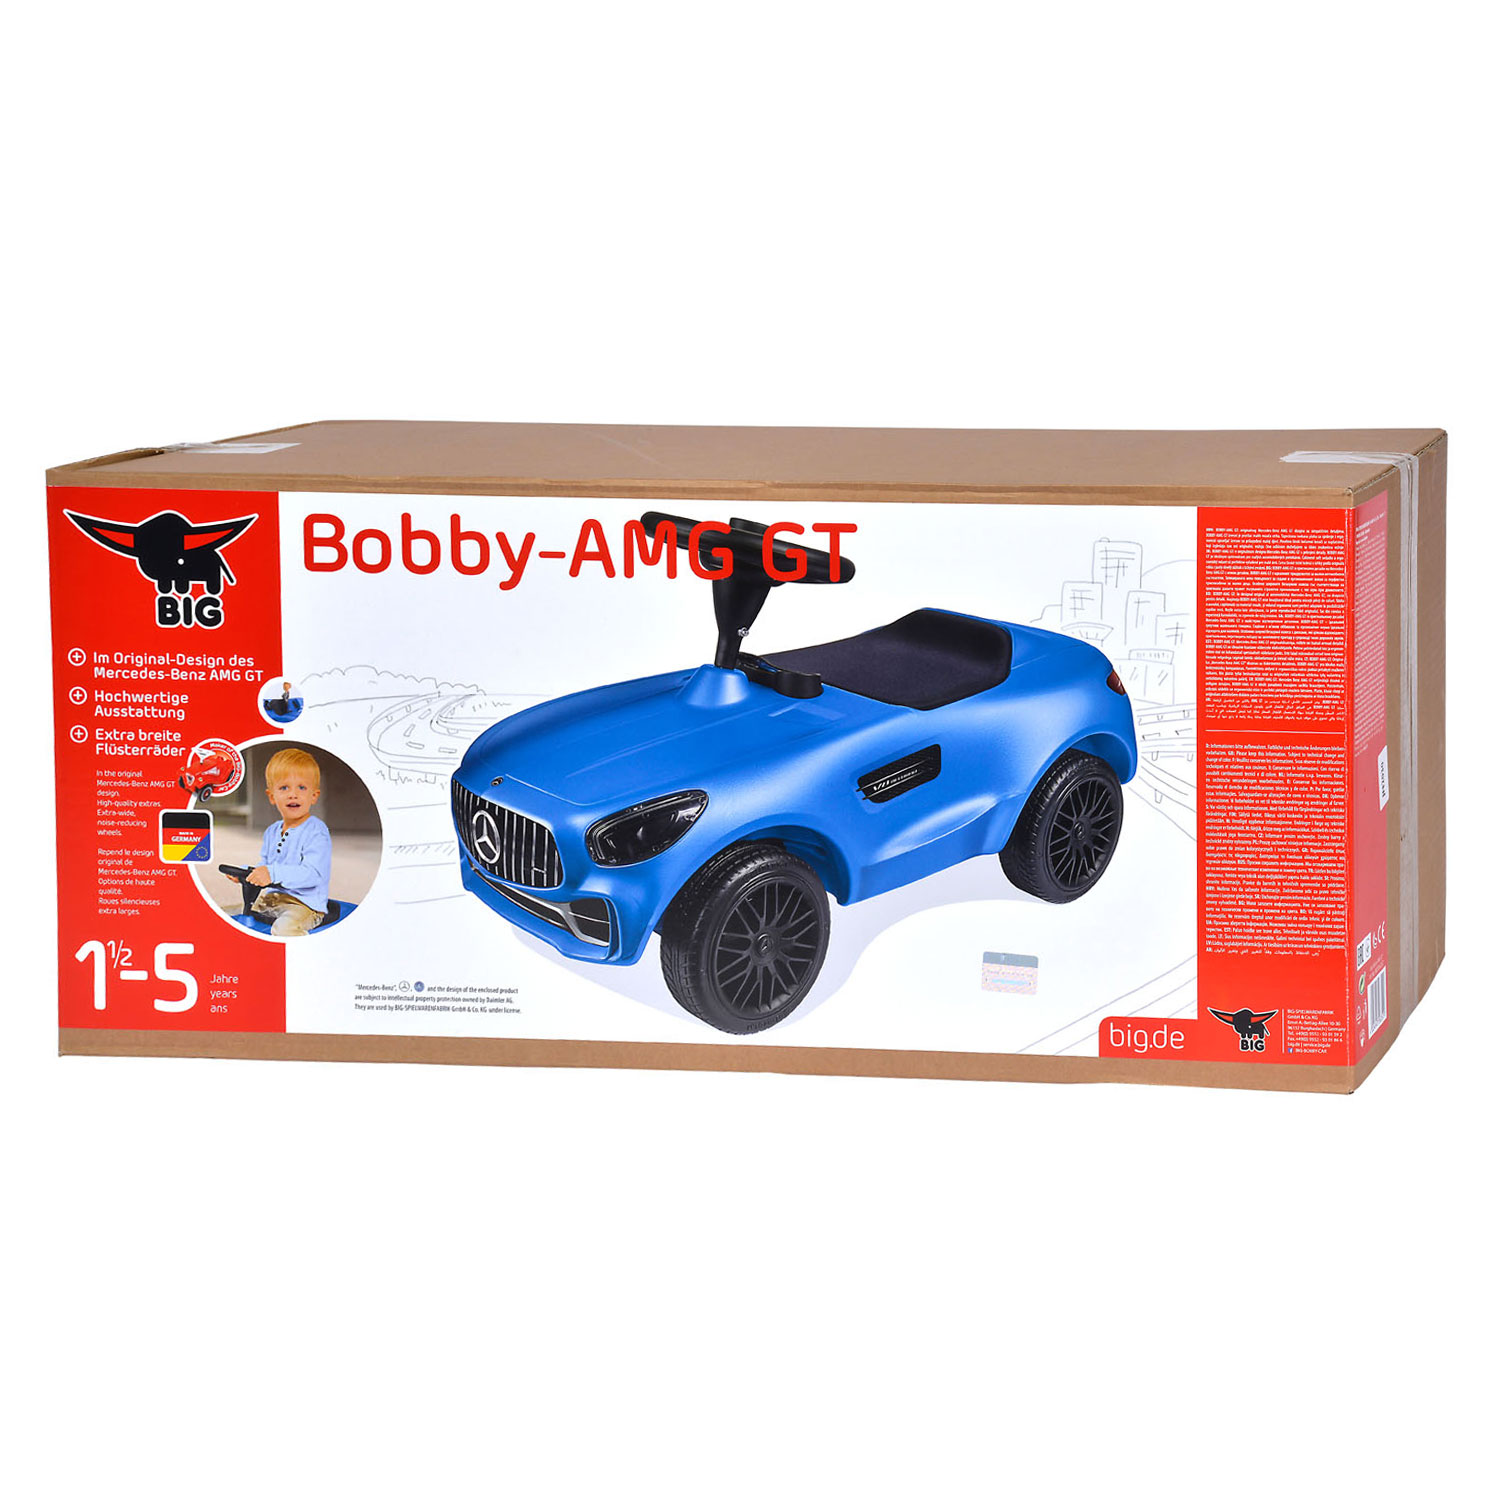 BIG Bobby Loopauto AMG GT